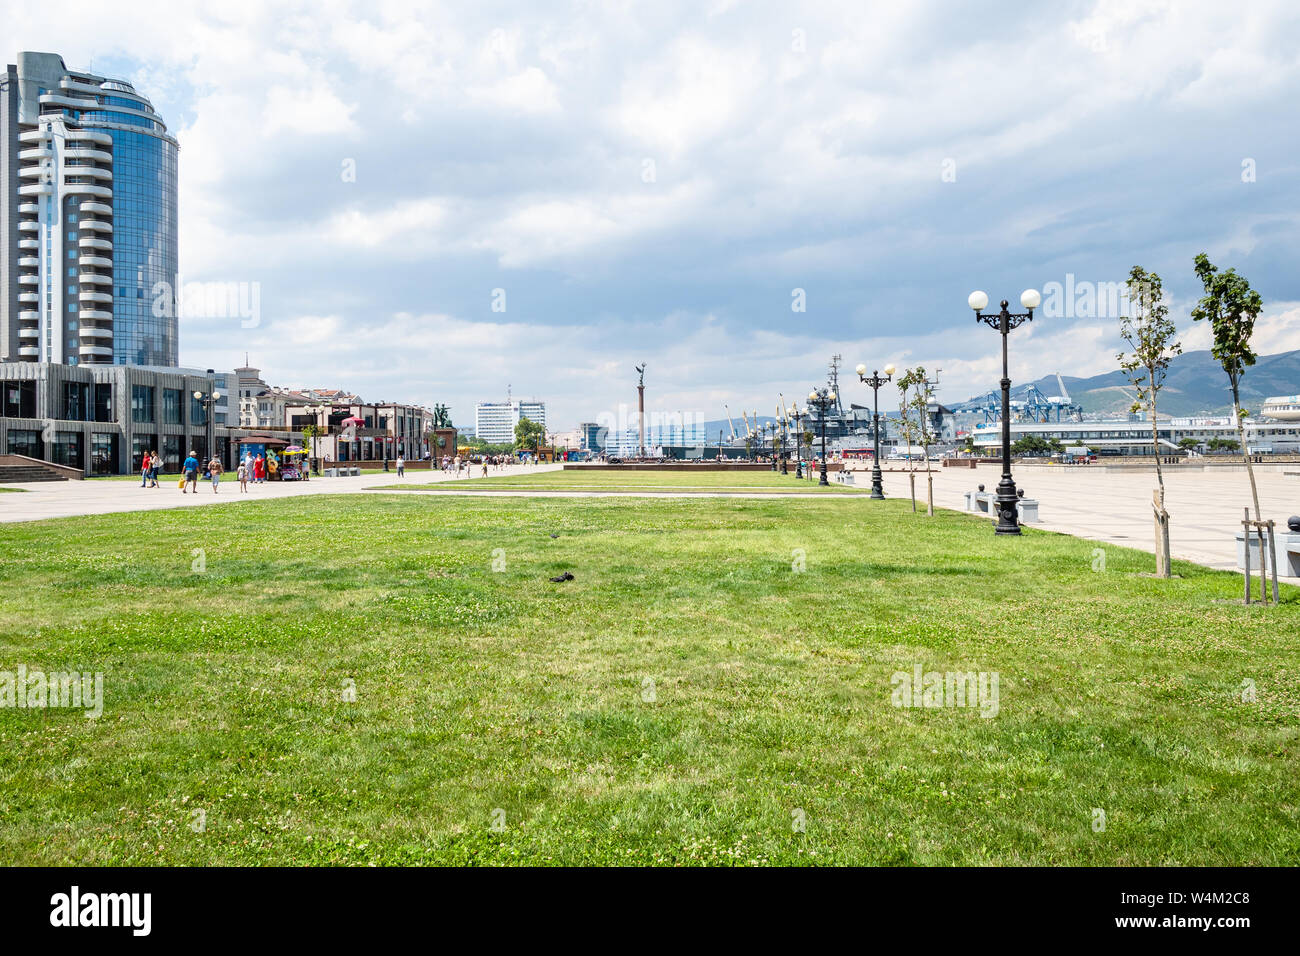 NOVOROSSIYSK, RUSSIA - JULY 7, 2019: people walk near lawns on Admiral Serebryakov Embankment in Novorossiysk. Novorossiysk is city in Krasnodar Krai, Stock Photo